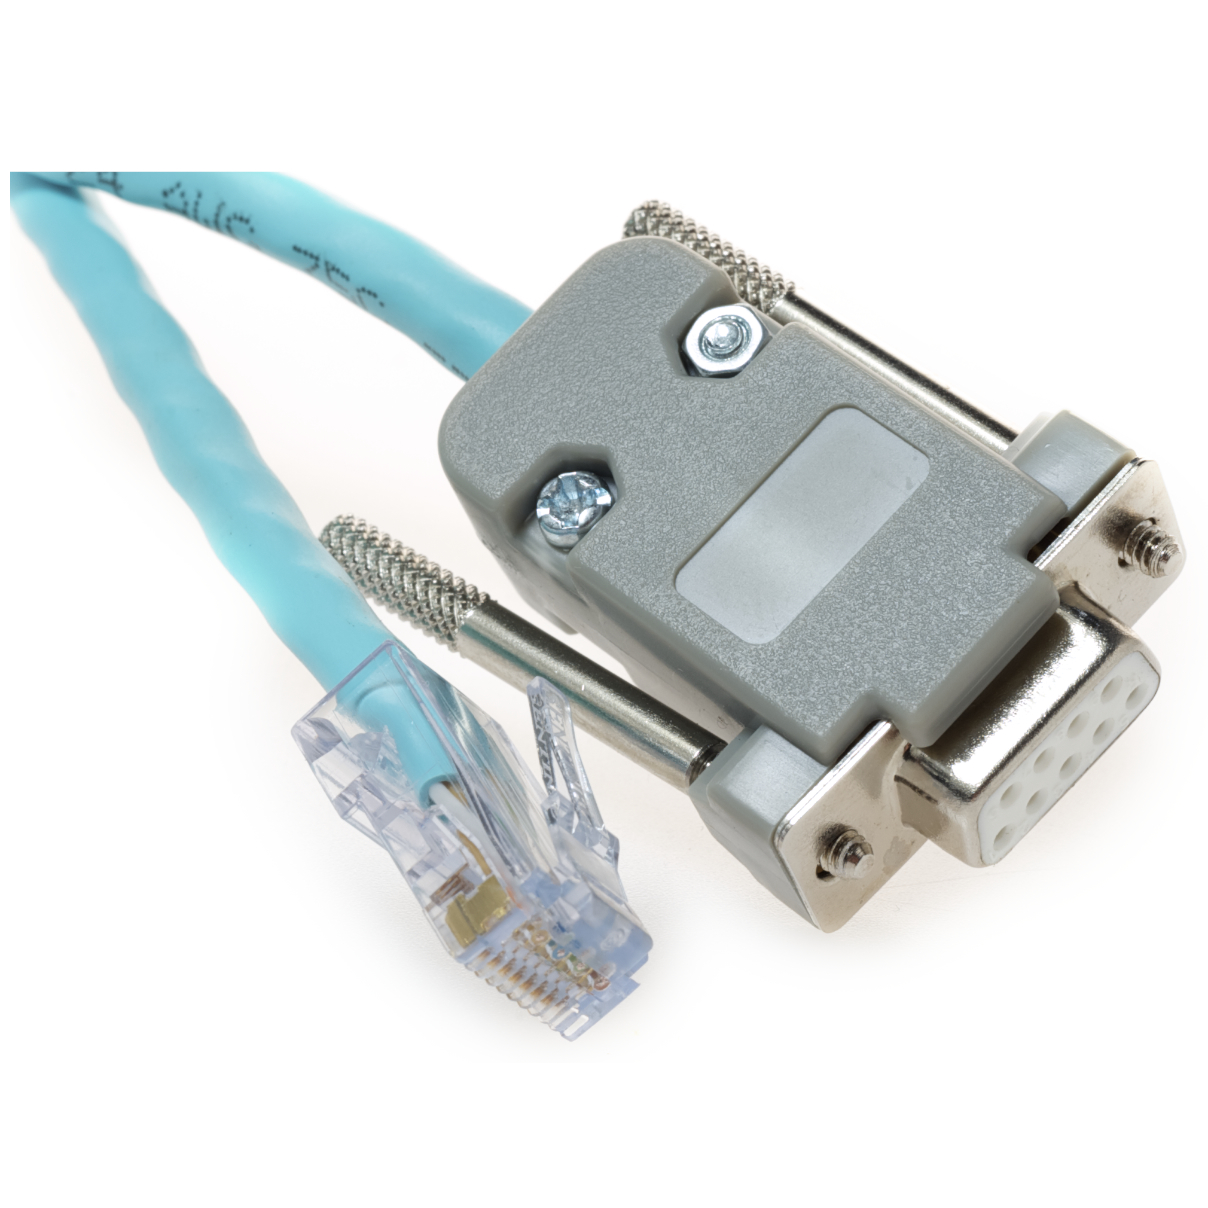 Cisco Compatible Console Cable DB9 to RJ45, Light Blue